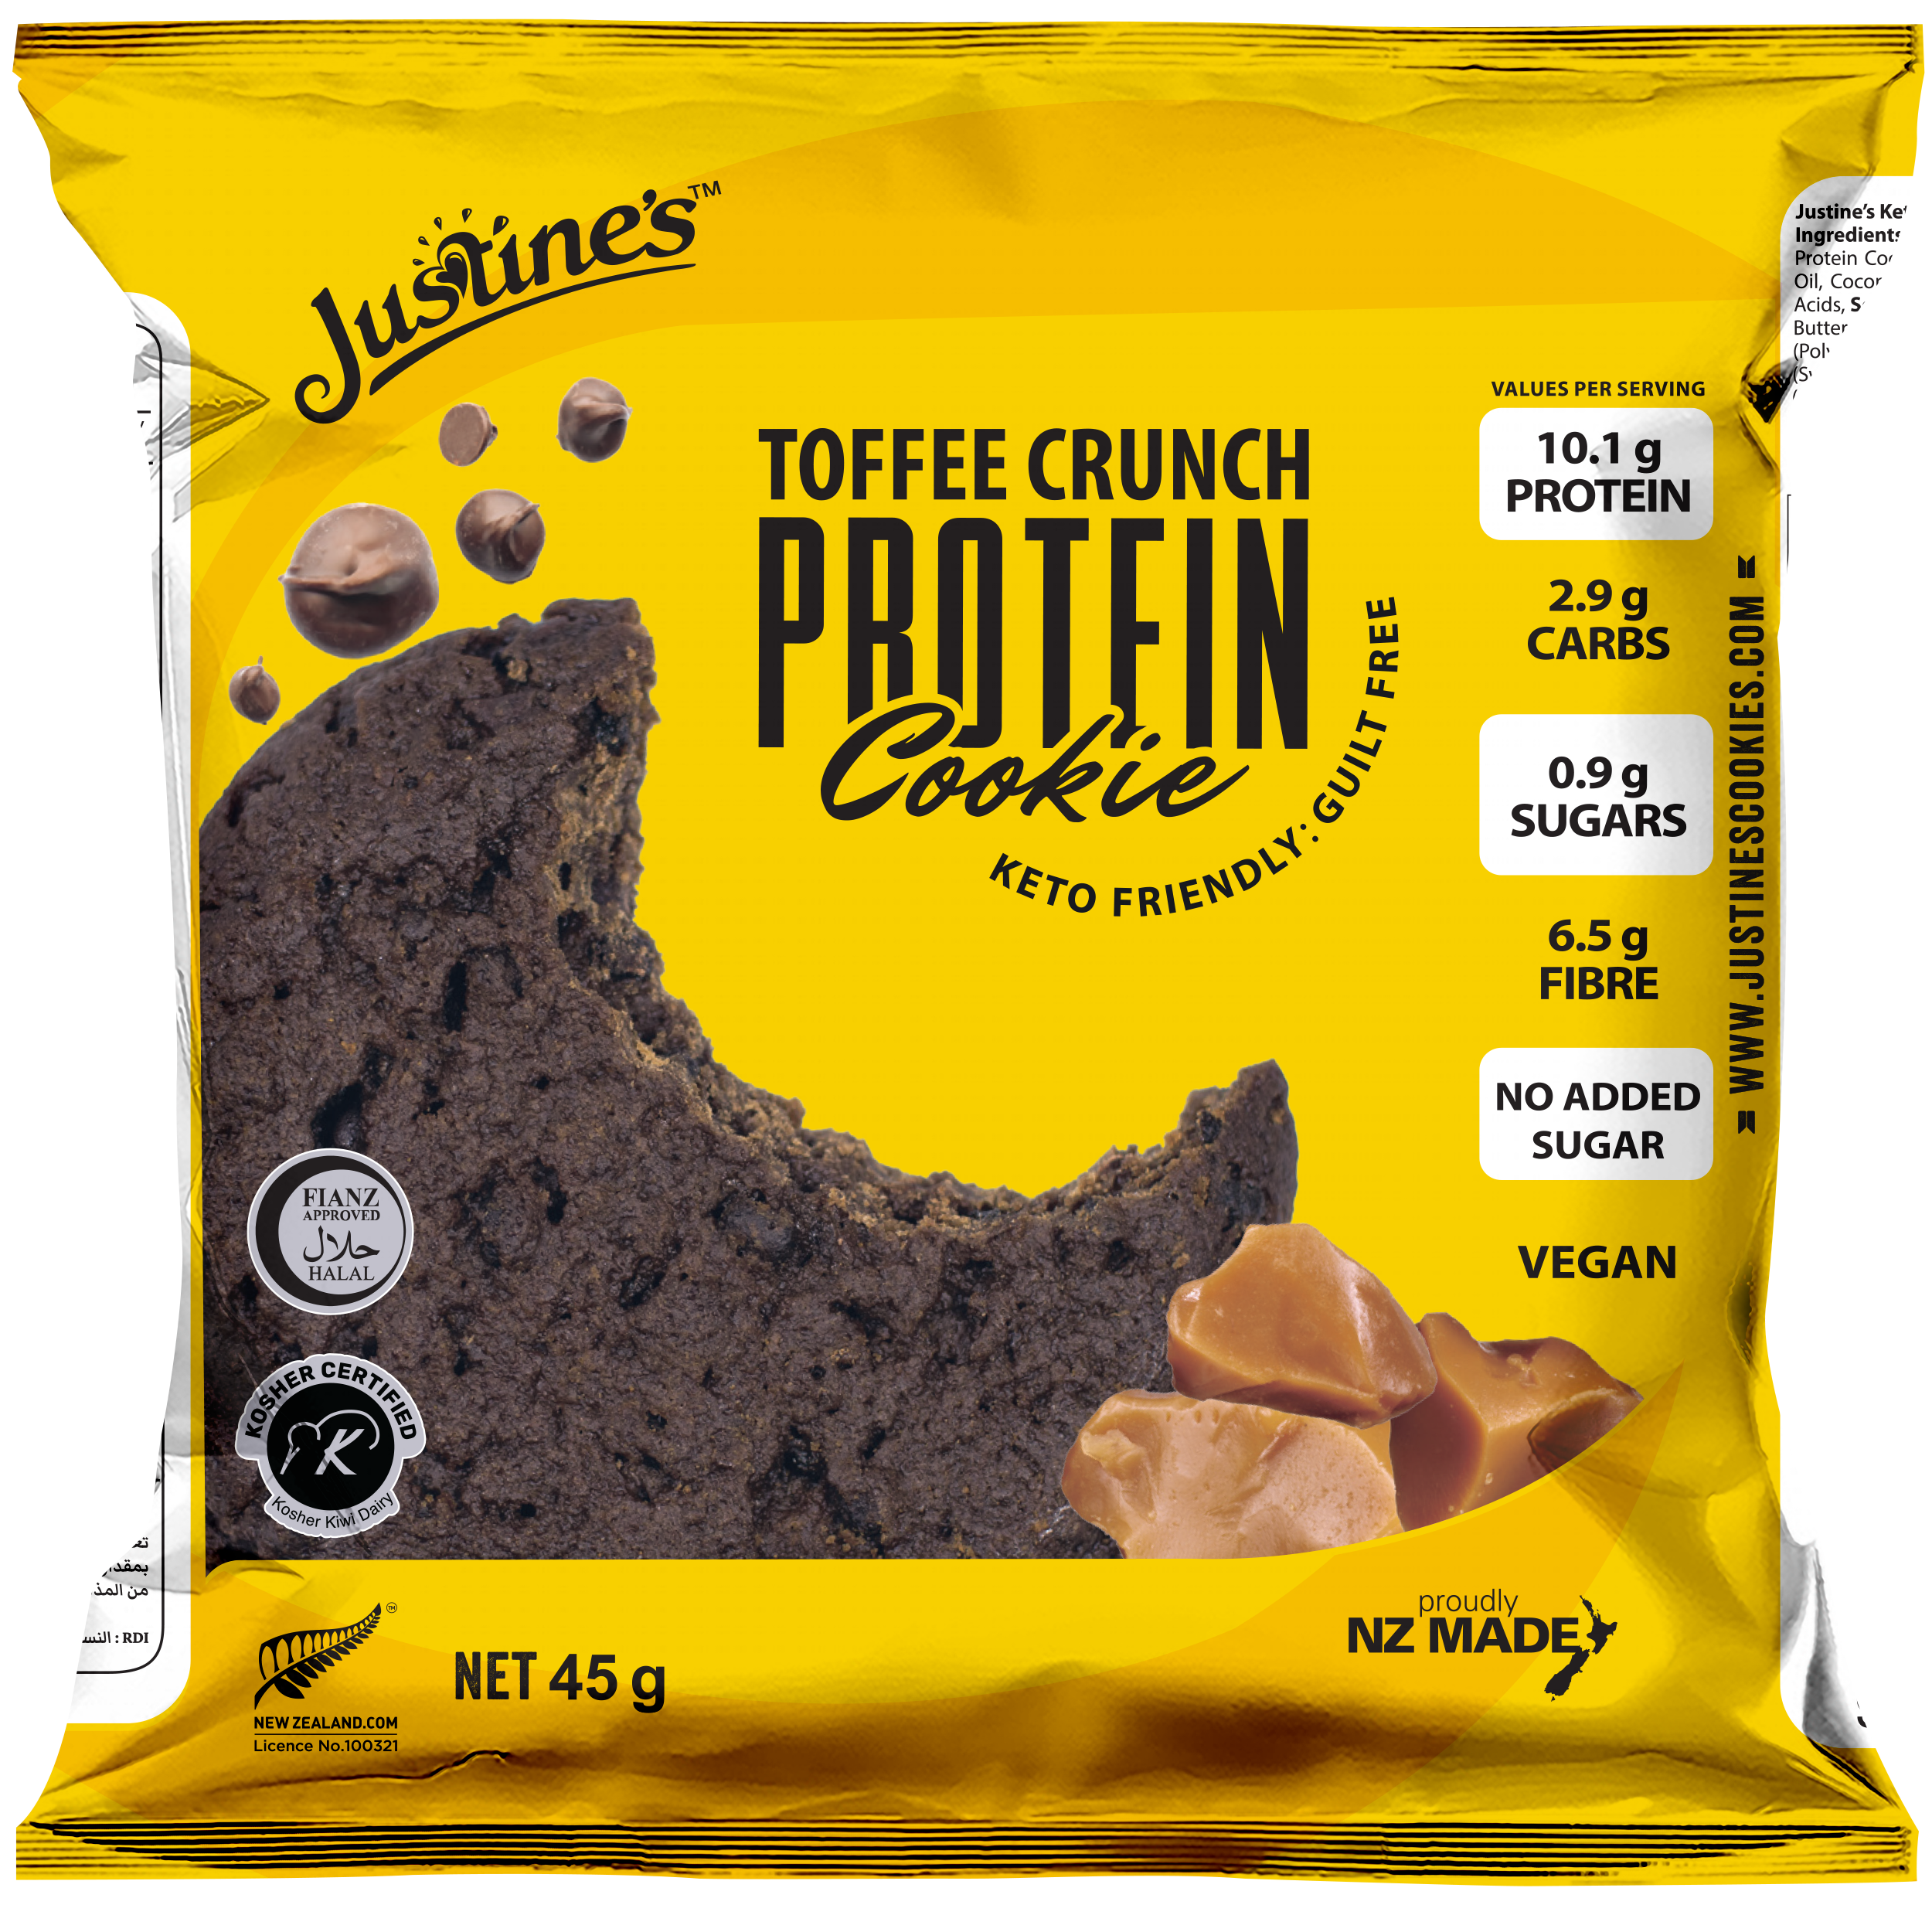 Justine's Keto Vegan Toffee Crunch Protein Cookie 